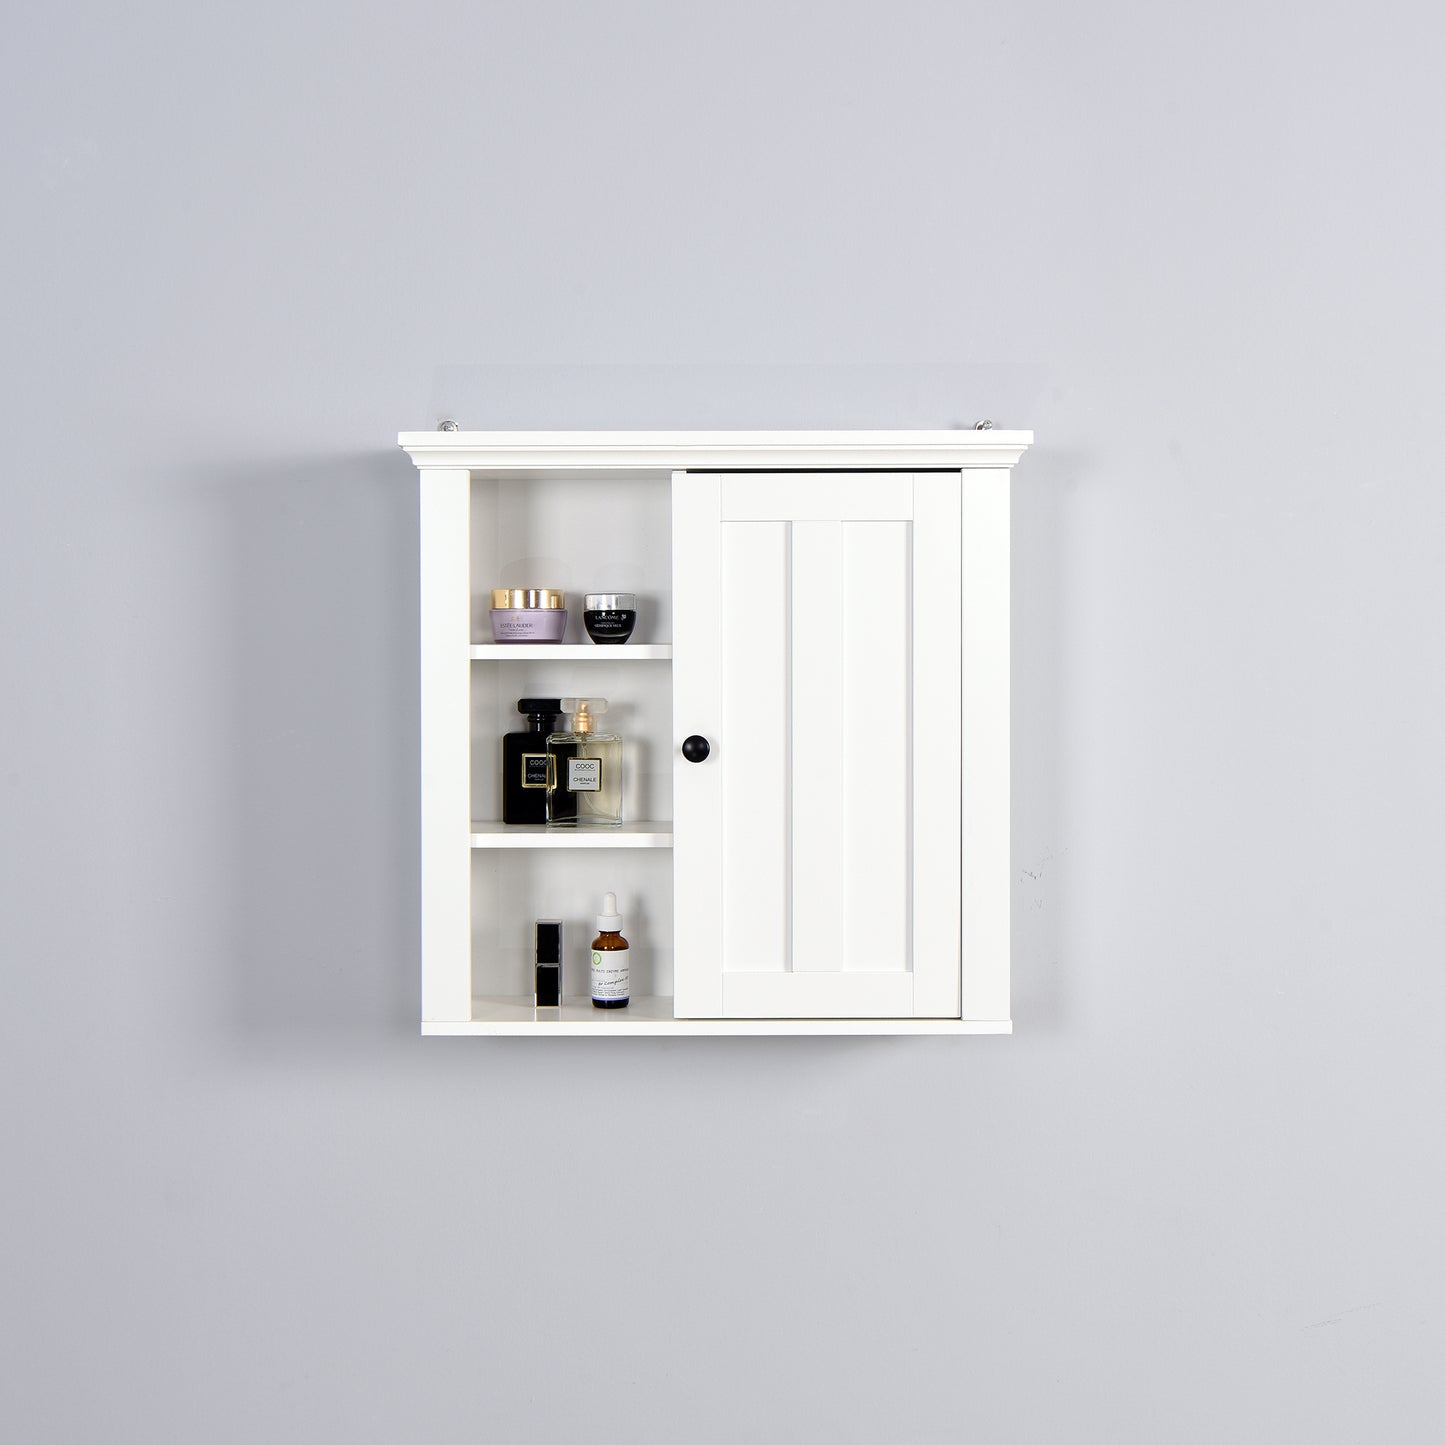 Bathroom Wooden Wall Cabinet with a Door 20.86x5.71x20 inch